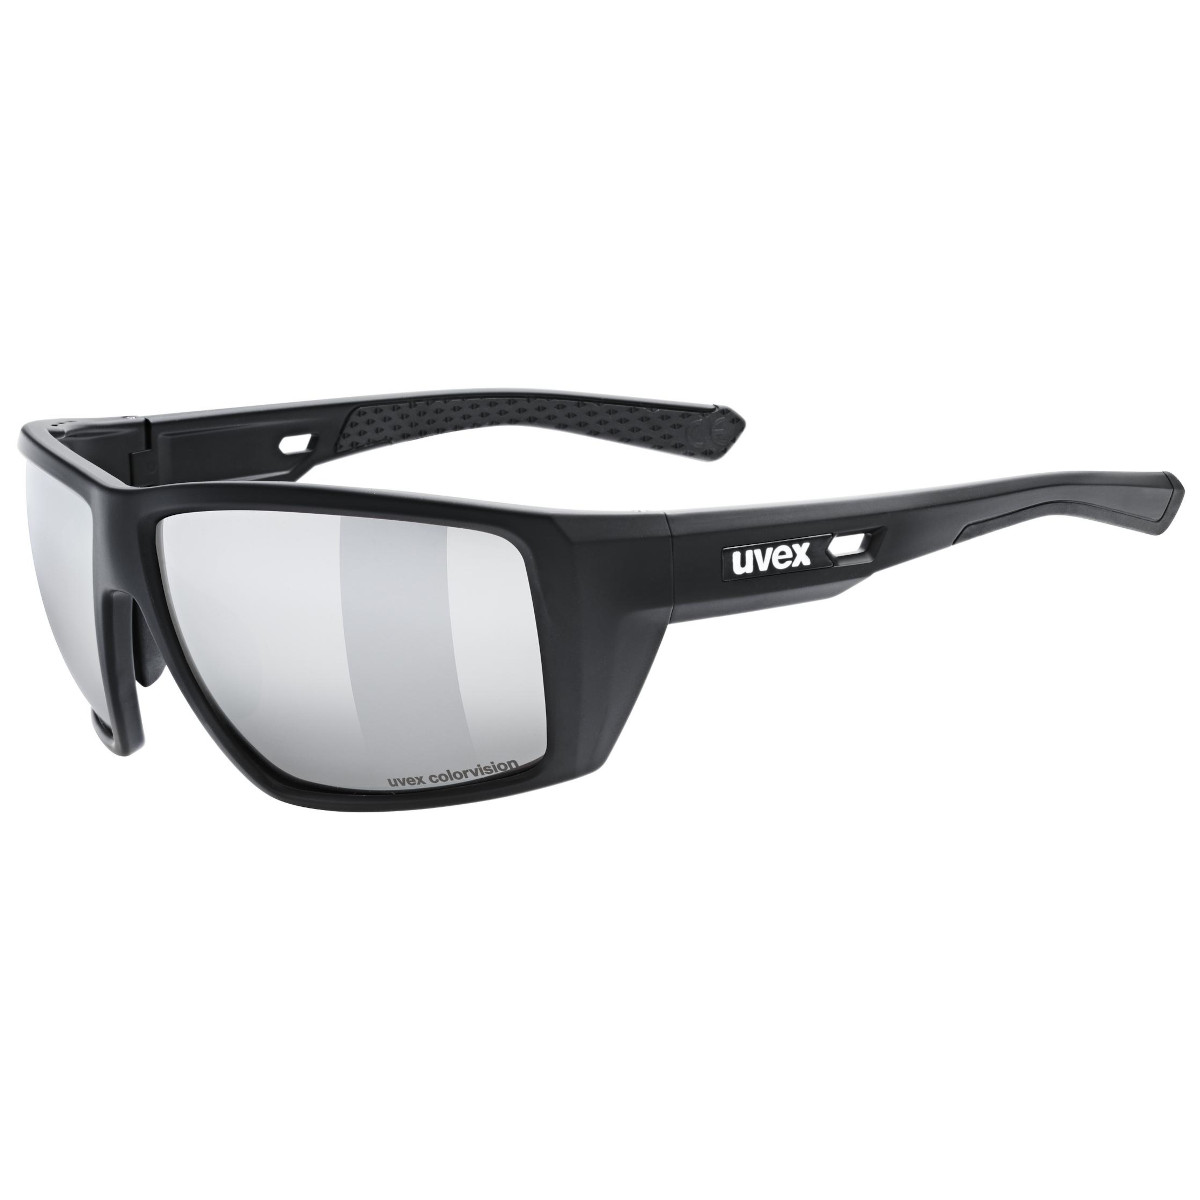 Uvex mtn venture CV Glasses - black matt/mirror silver colorvision